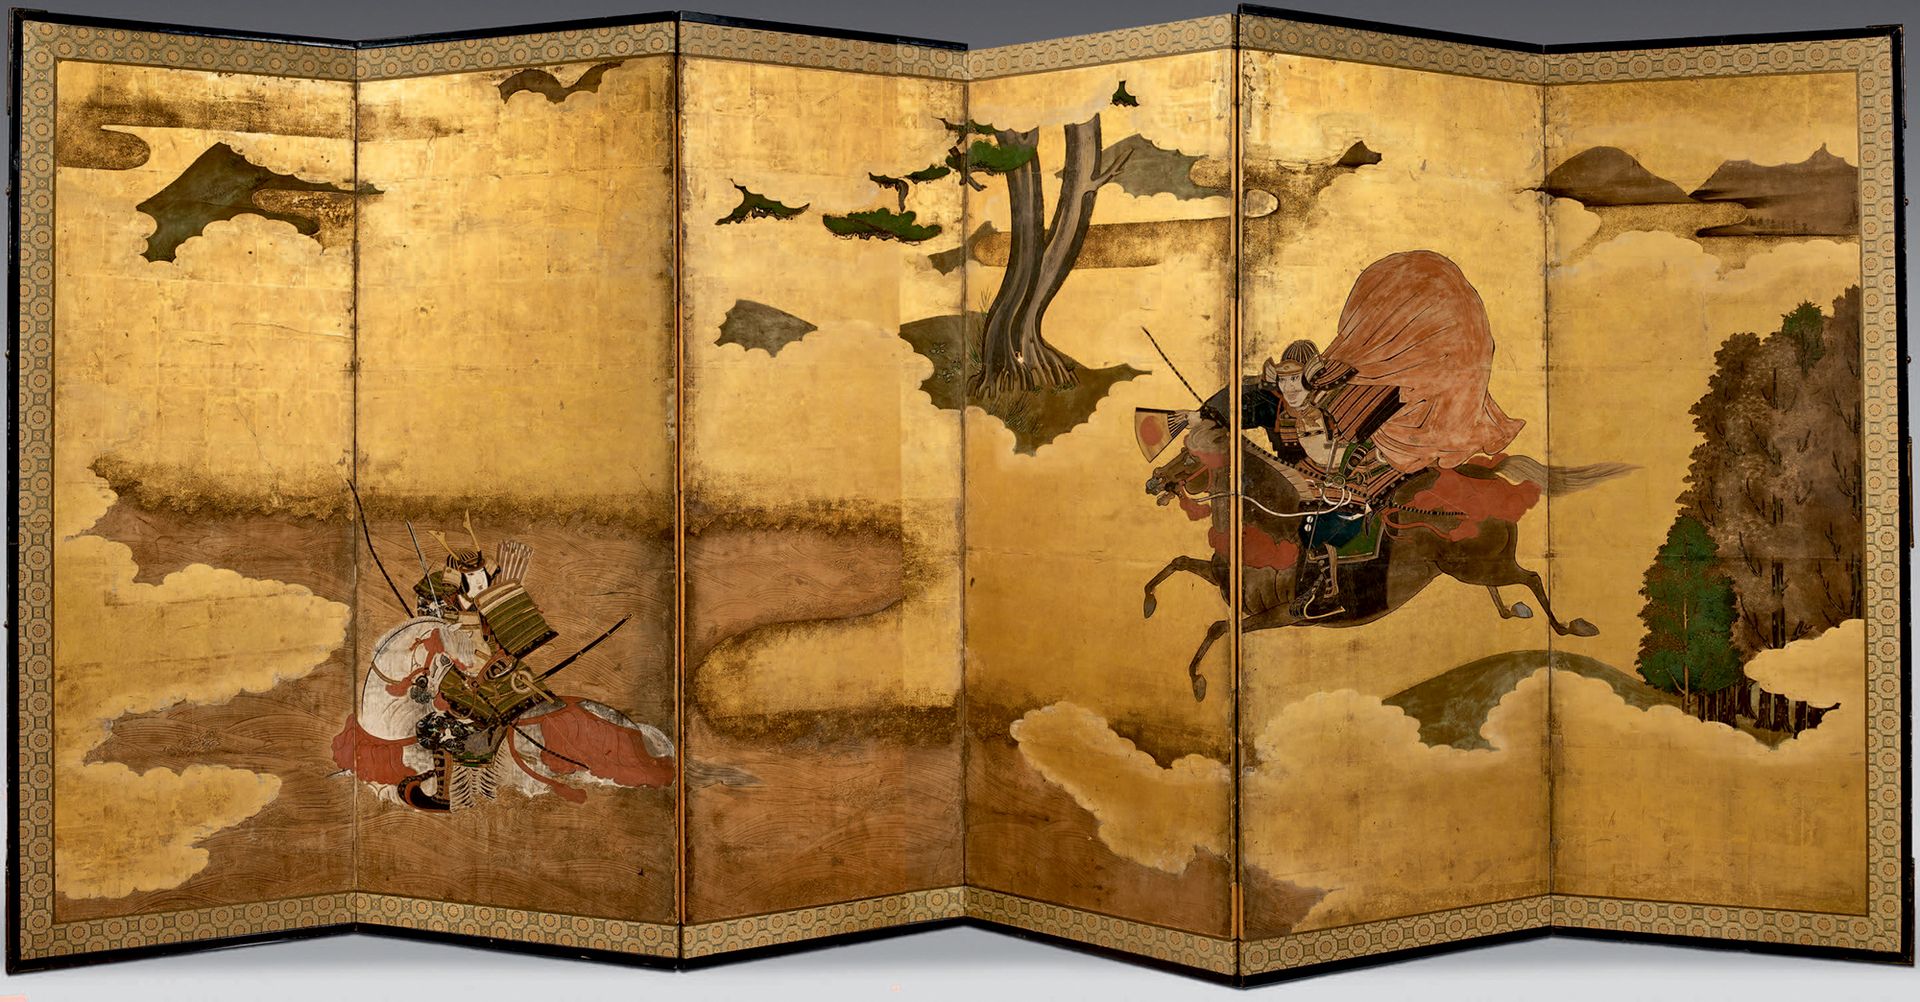 JAPON - Époque Edo (1603-1868), XVIIIe siècle 六叶屏风，《平家物语》中的场景：佐佐木
高月骑着曾经属于幕府将军赖朝&hellip;